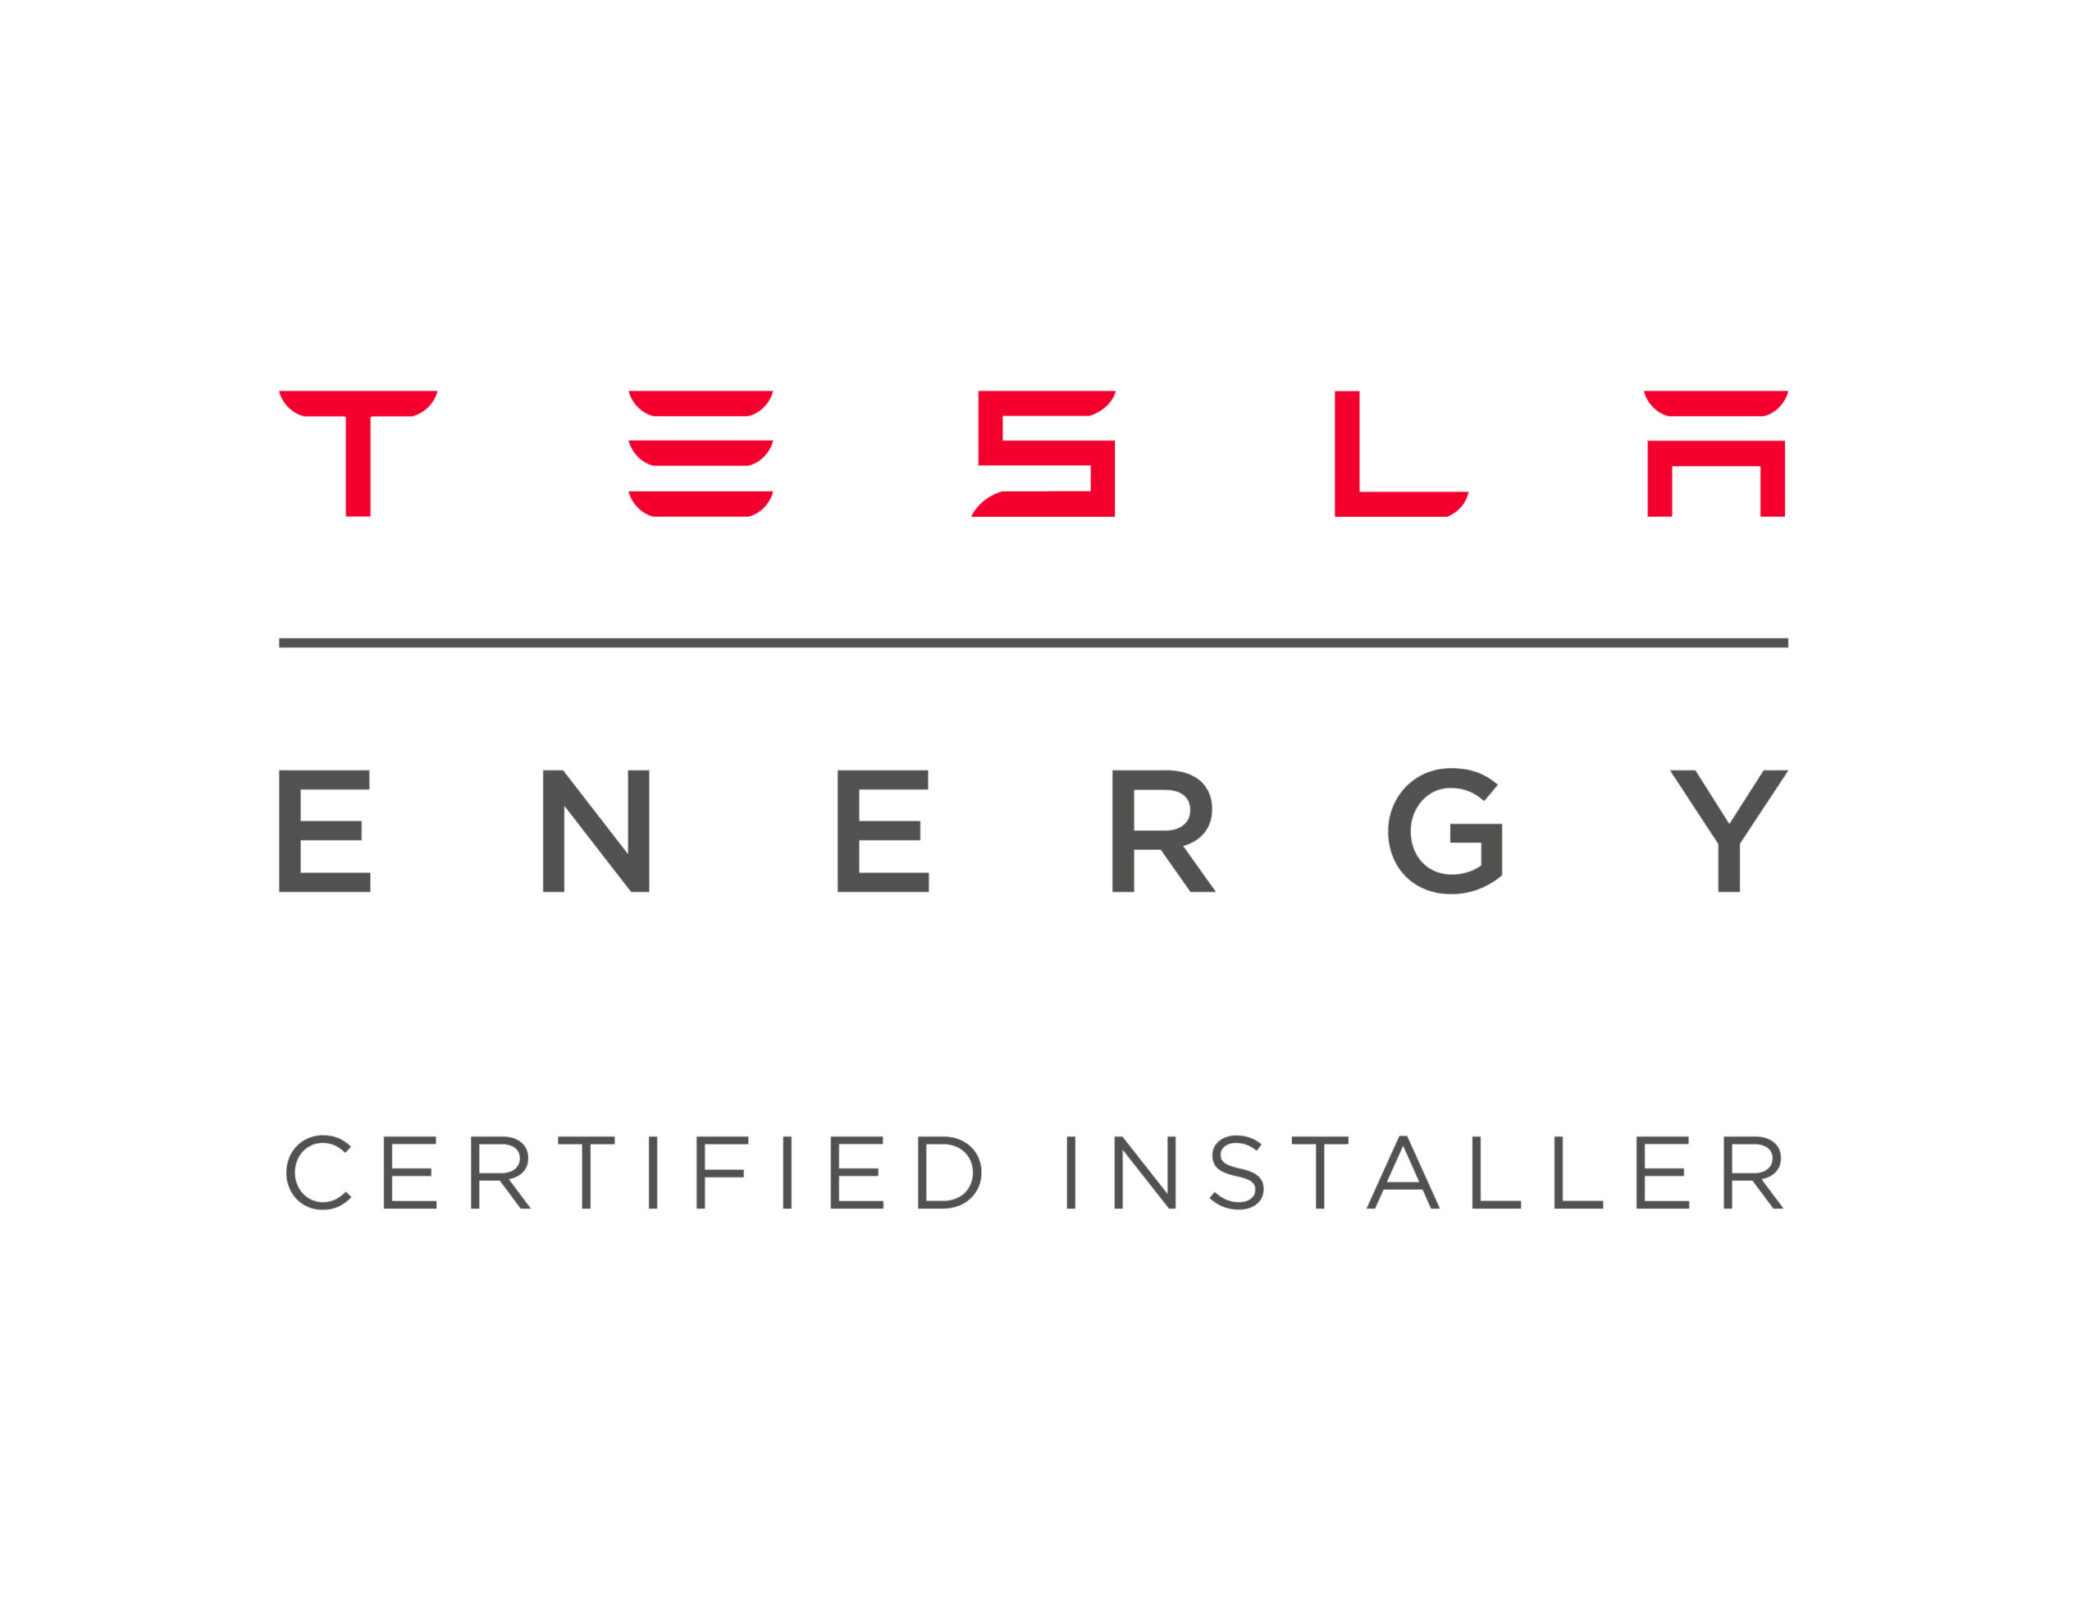 Sunlogics are a Tesla energy certified installer